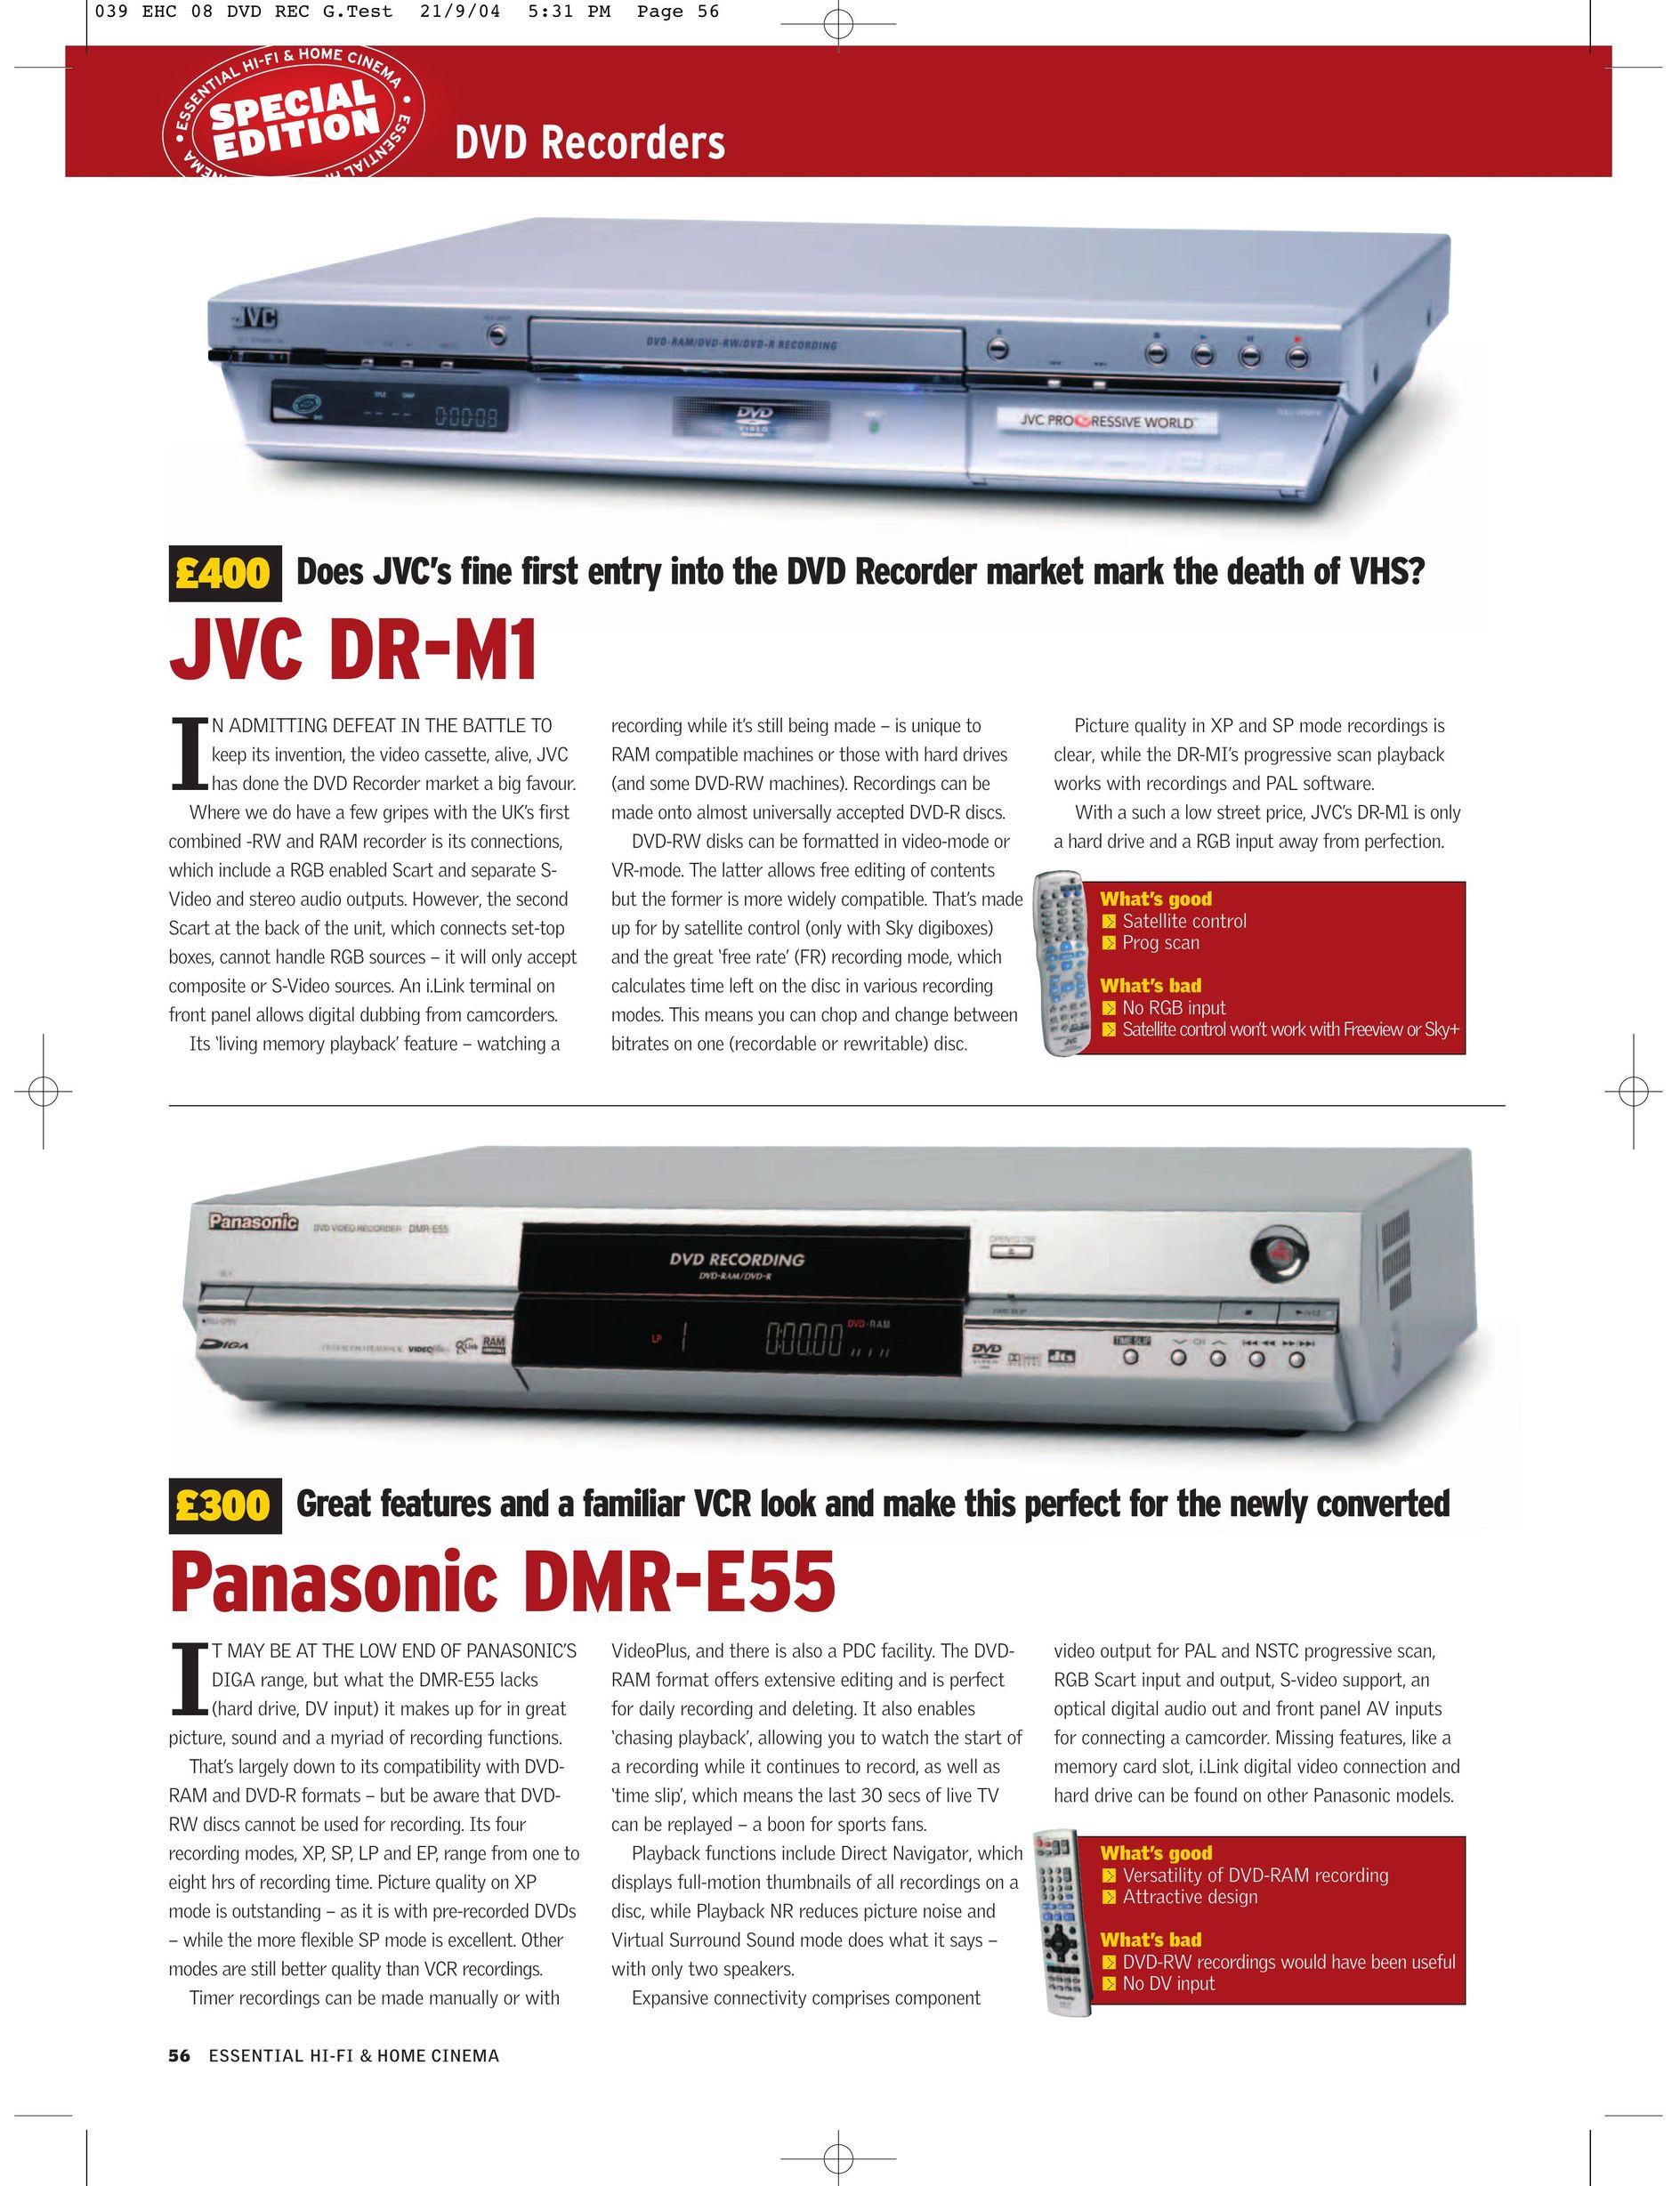 Humax DR-M1 DVD Recorder User Manual